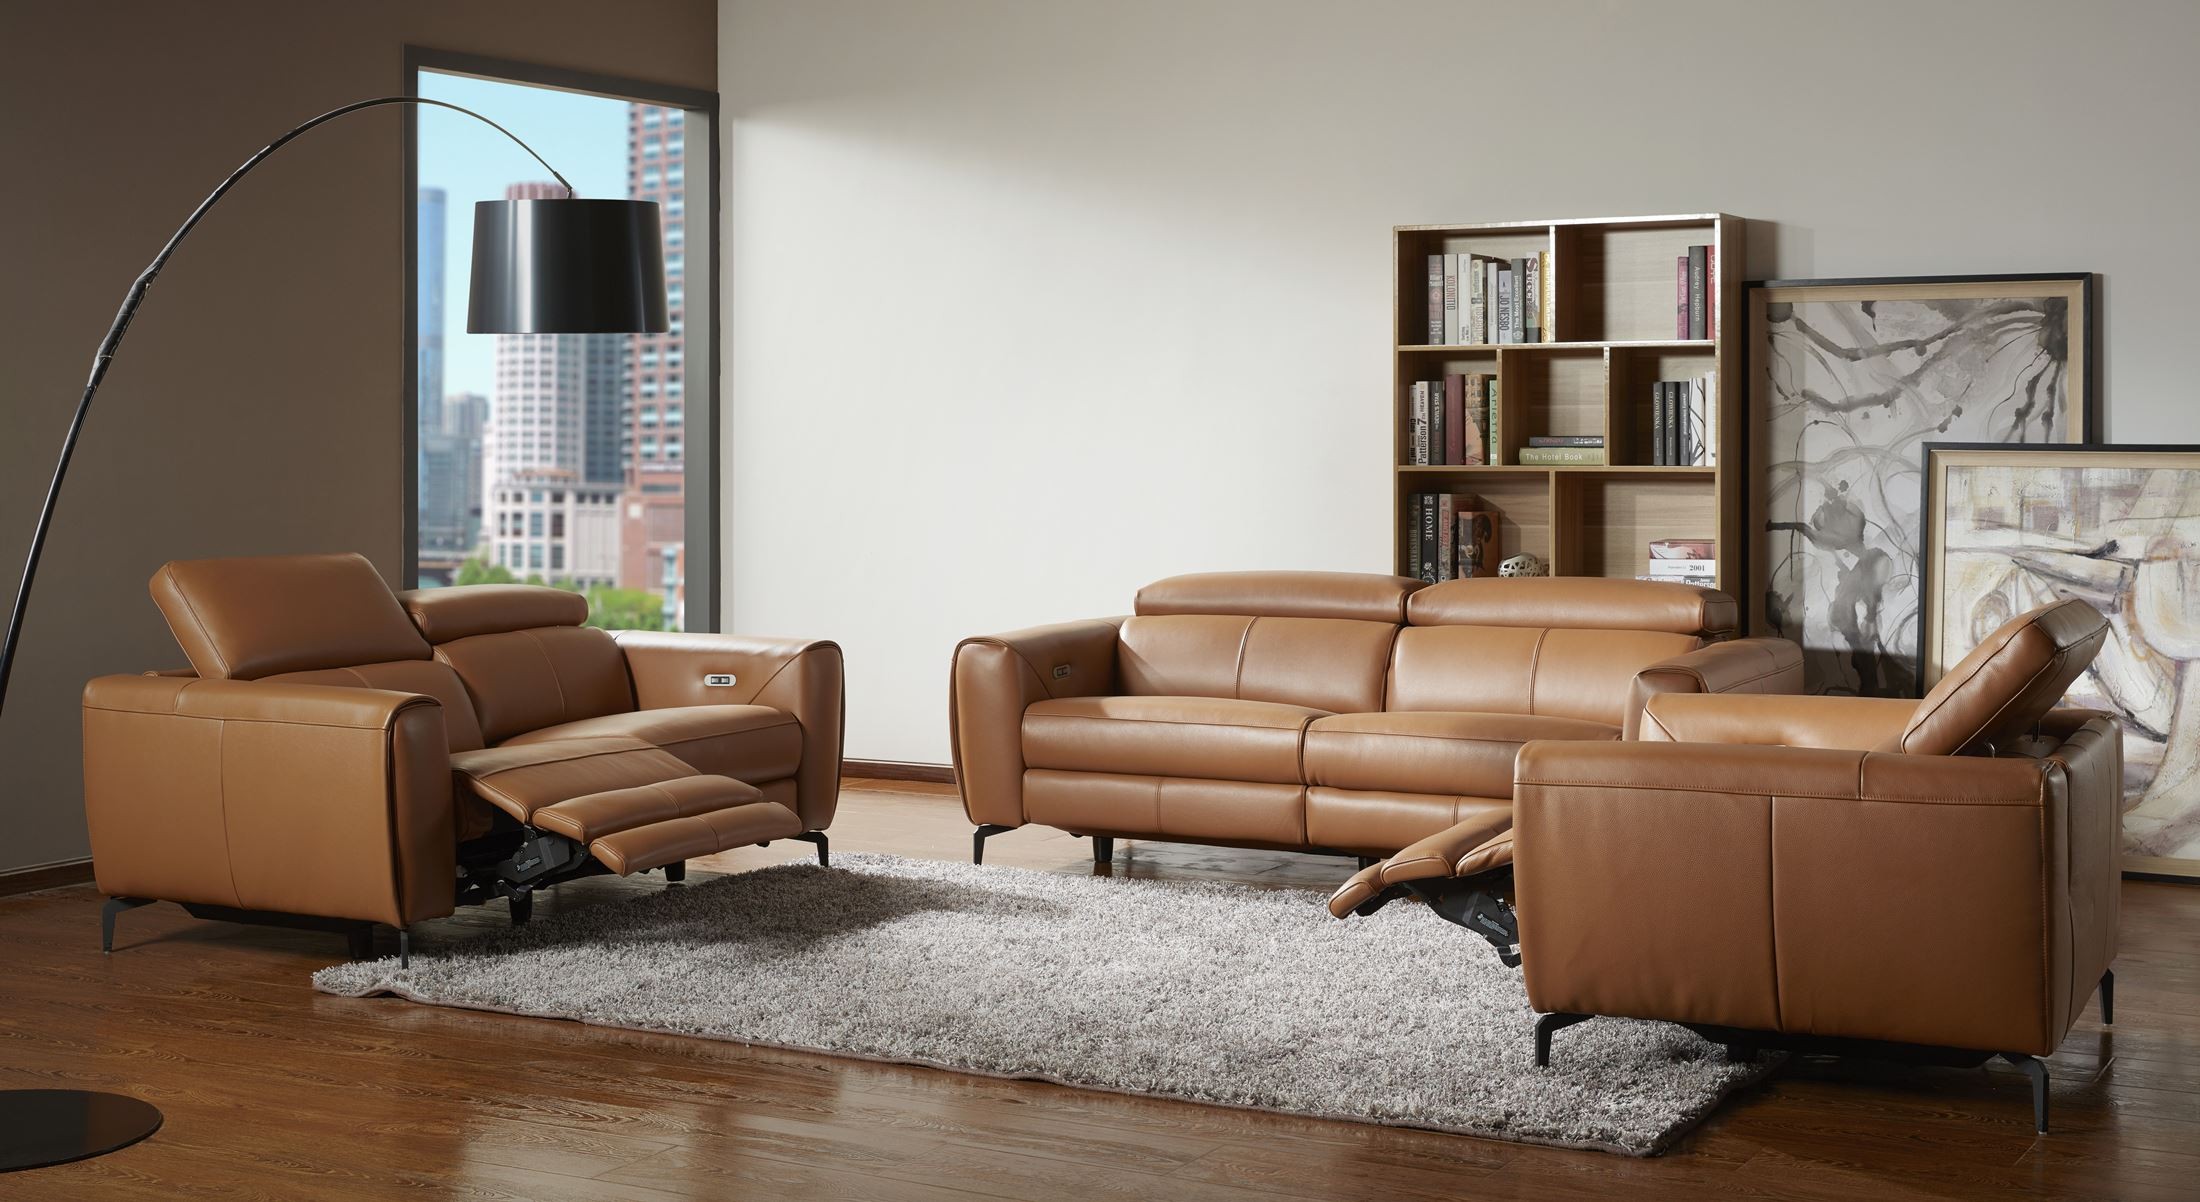 Lorenzo Caramel Leather Living Room Set, Leather Livingroom Sets